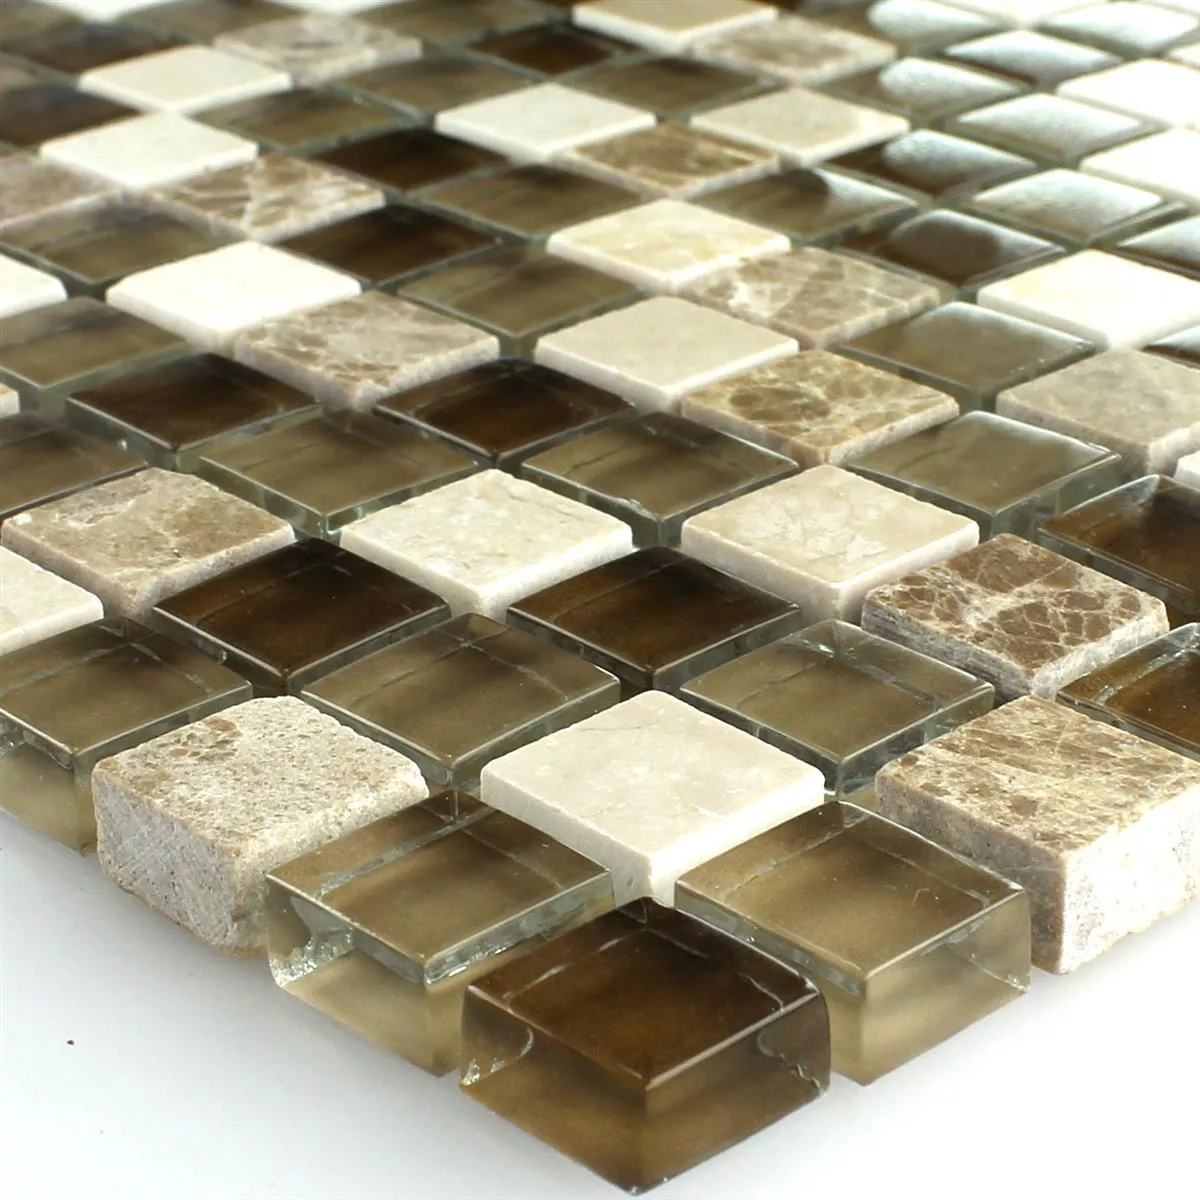 Mosaico Vetro Marmo Marrone Beige